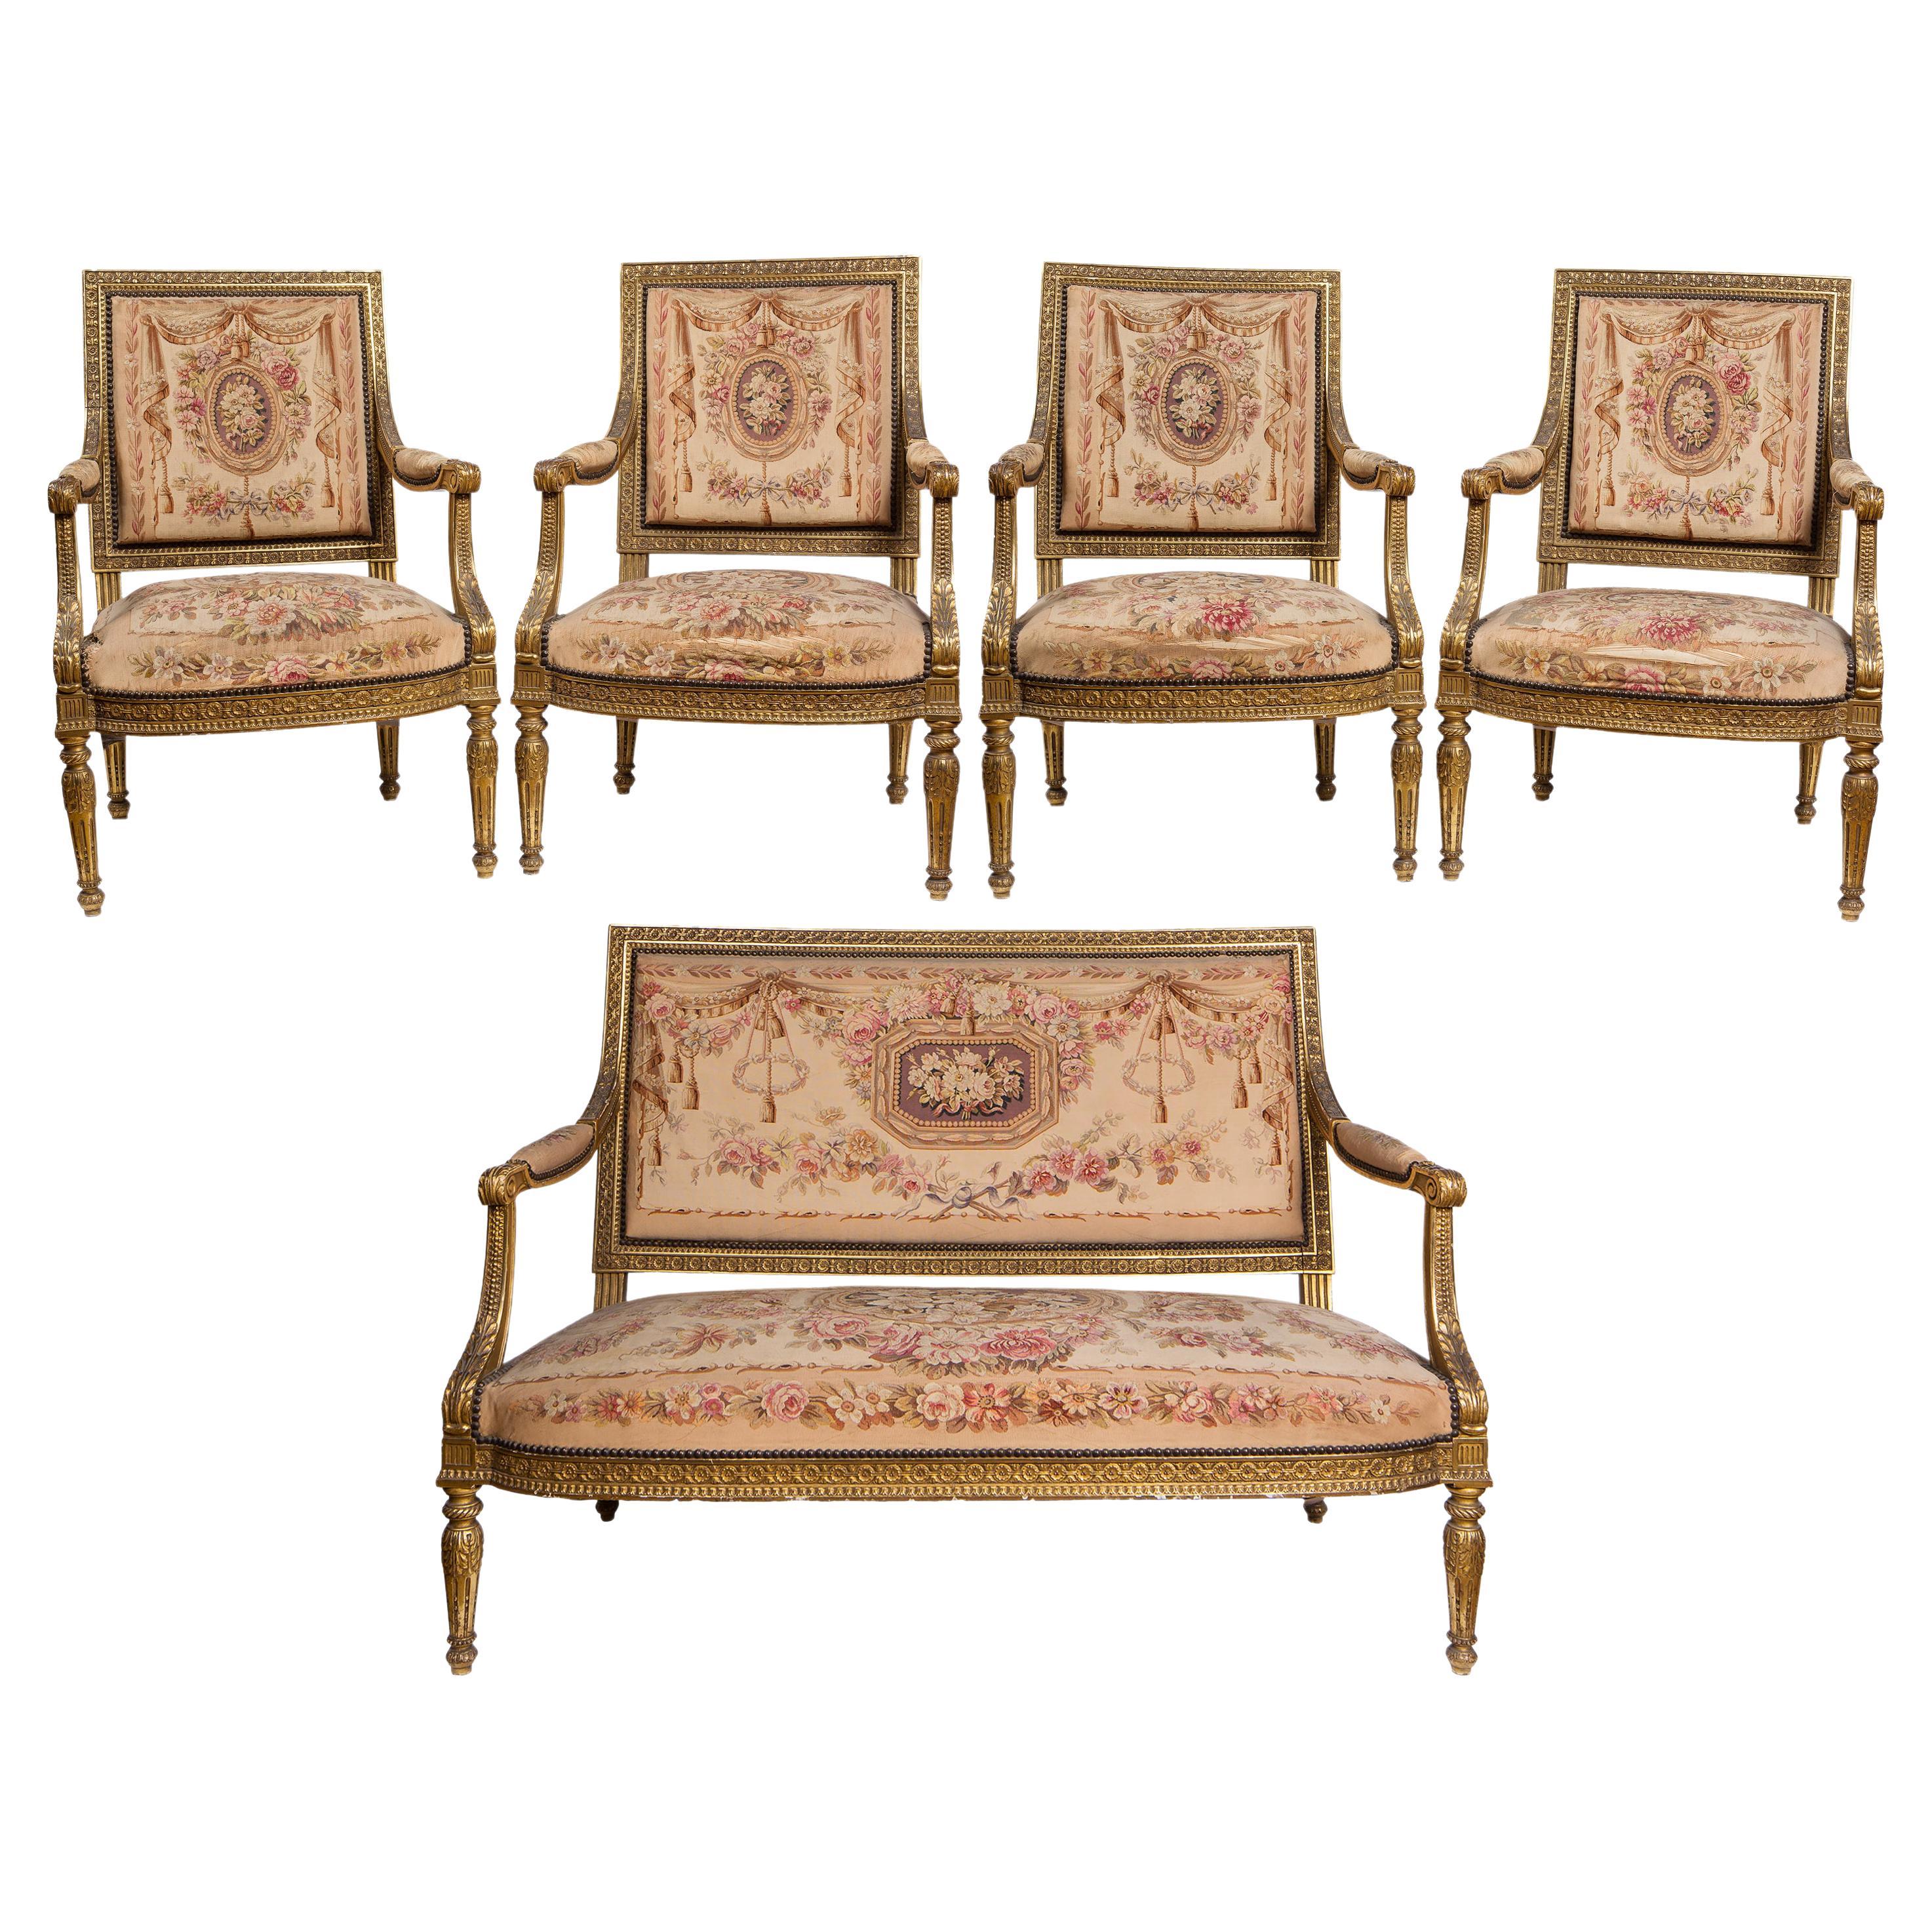 Antique Louis XVI Style 5 Piece Salon Suite, Sofa, 4 Chairs, Aubusson Upholstery For Sale